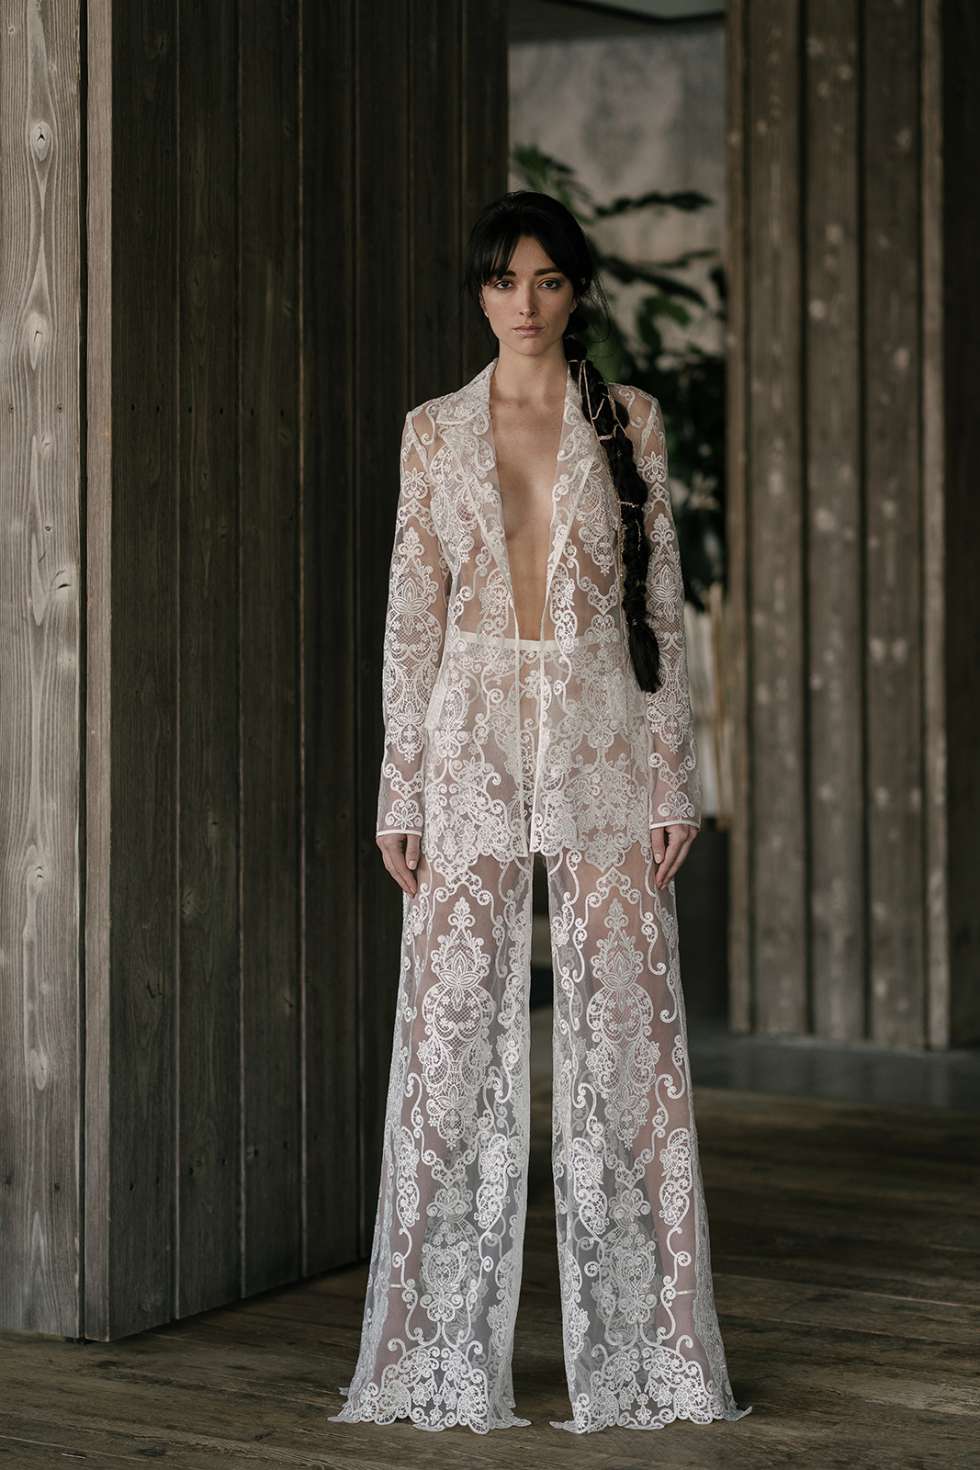 The Rivini 2019 Wedding Dress Collection by Rita Vinieris